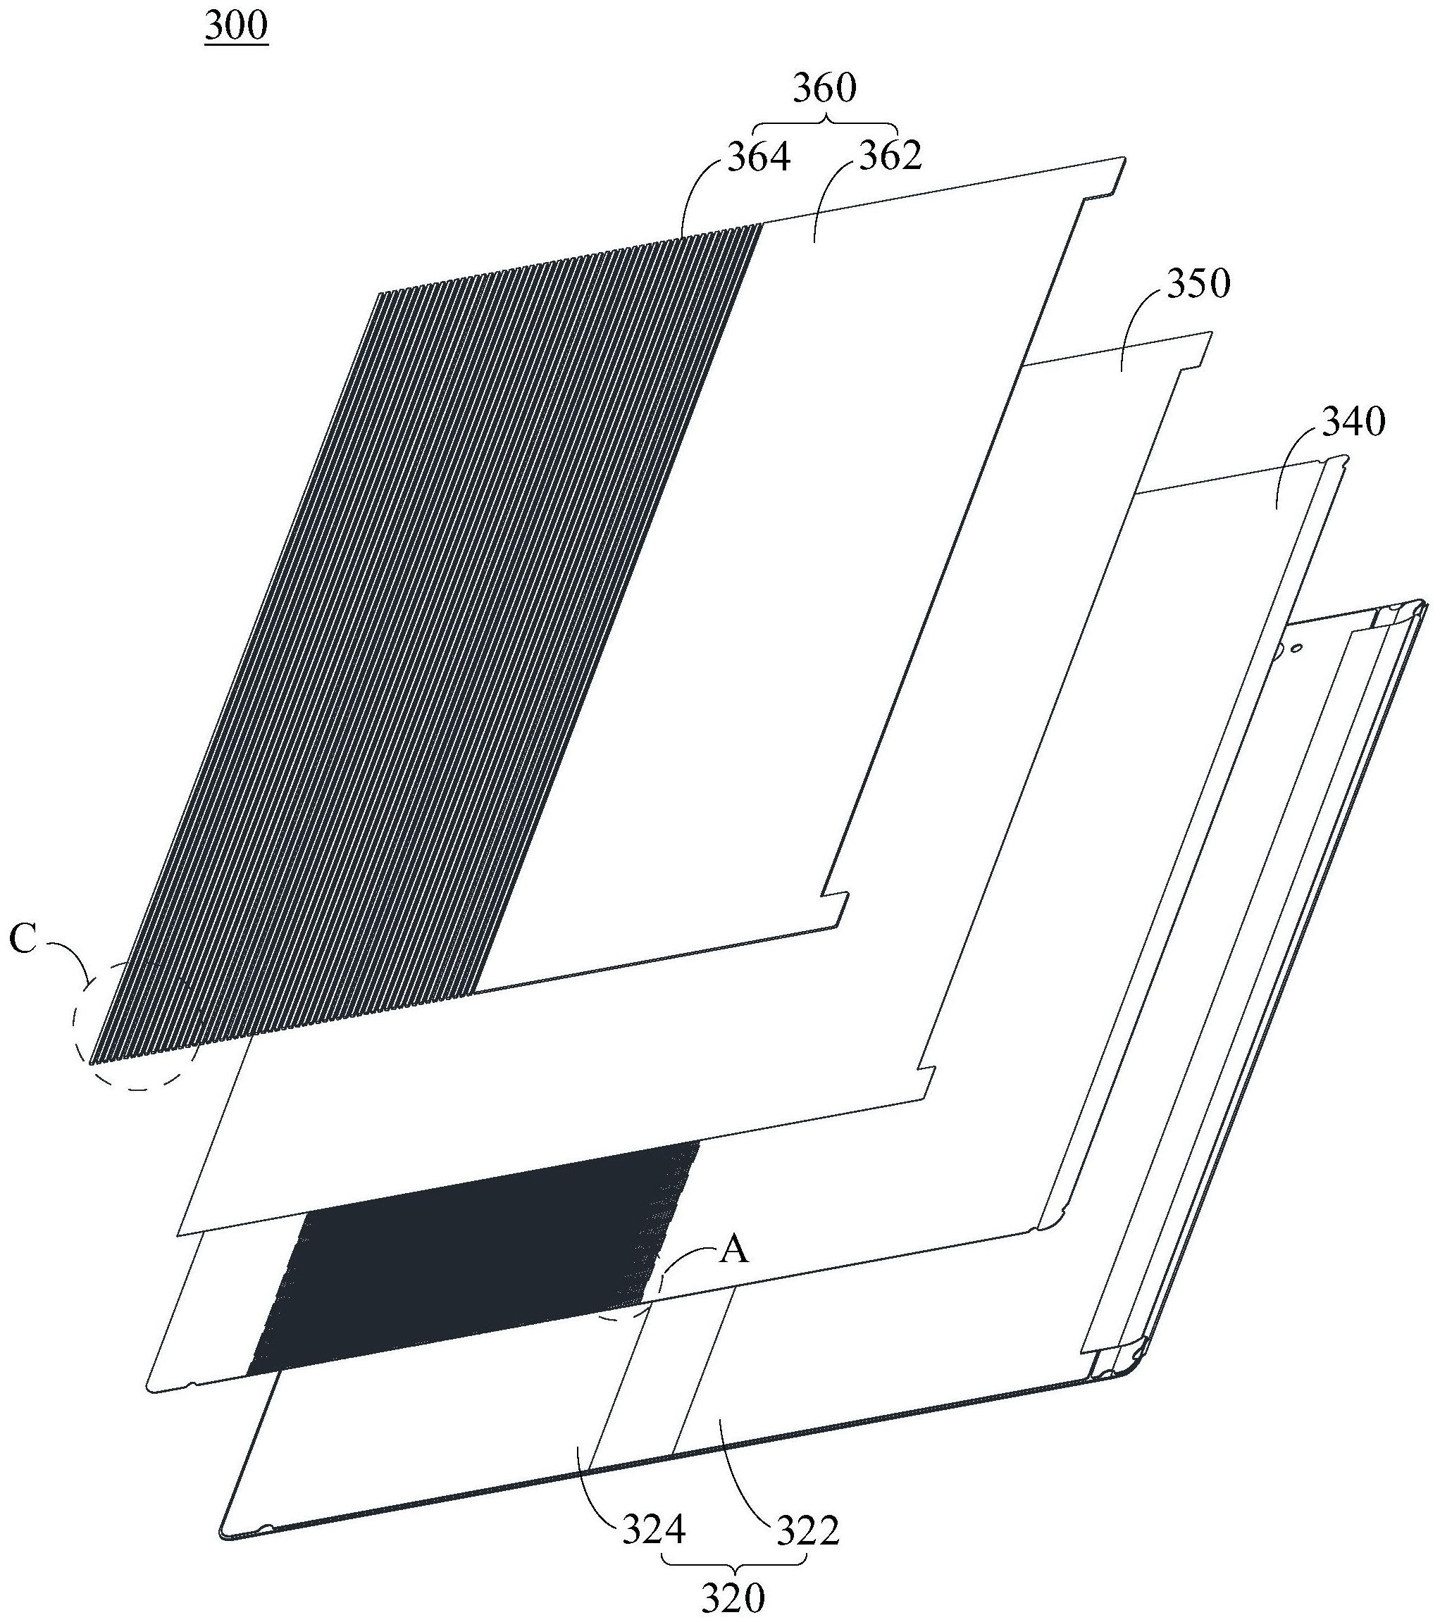 oppo公开柔性屏相关专利,或为折叠屏新机做准备